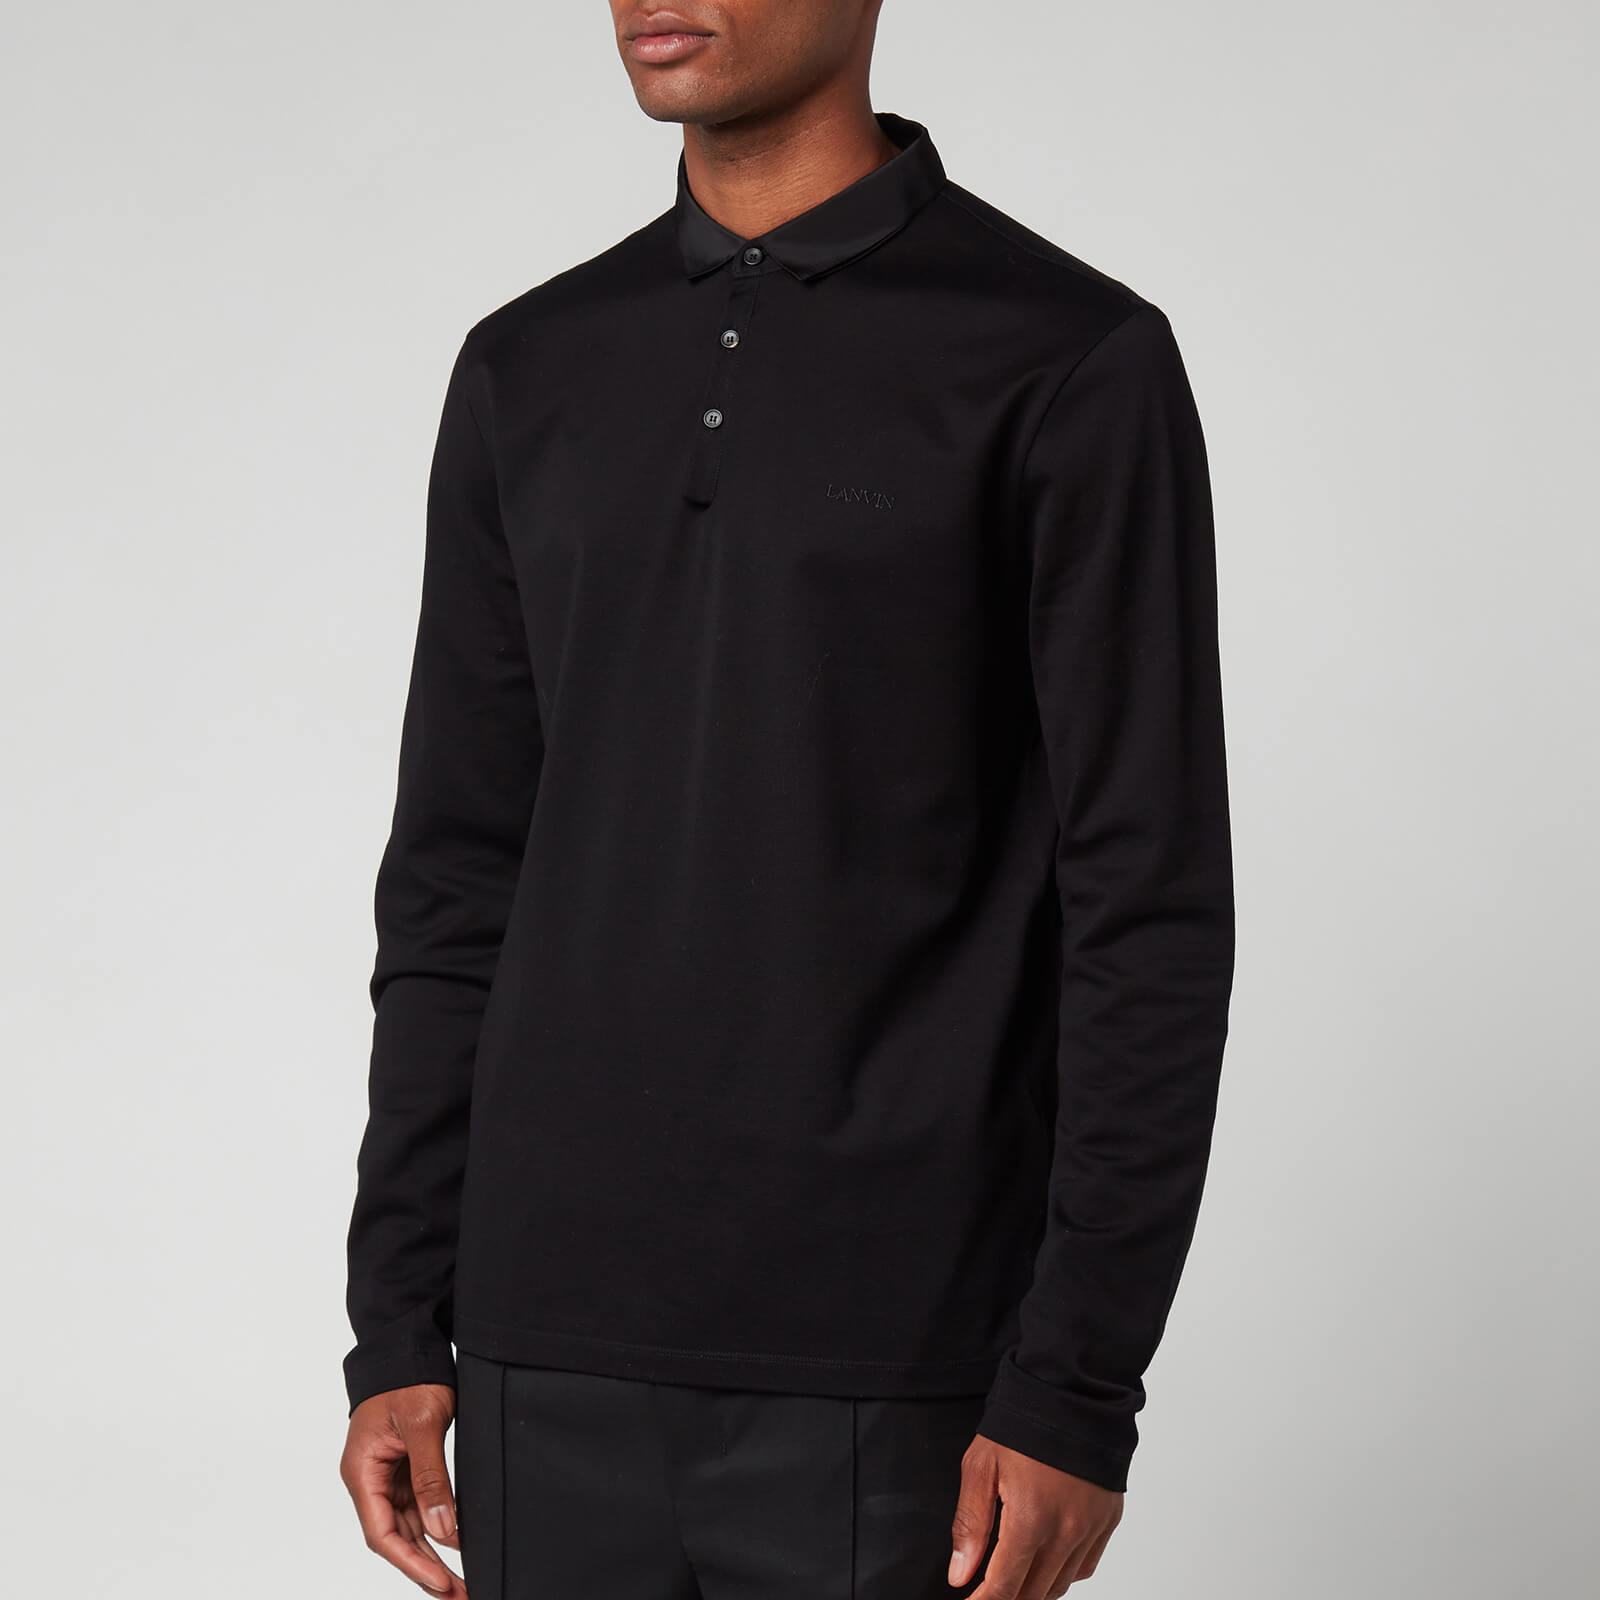 Lanvin Men's Classic Long Sleeve Polo Shirt - Black - M